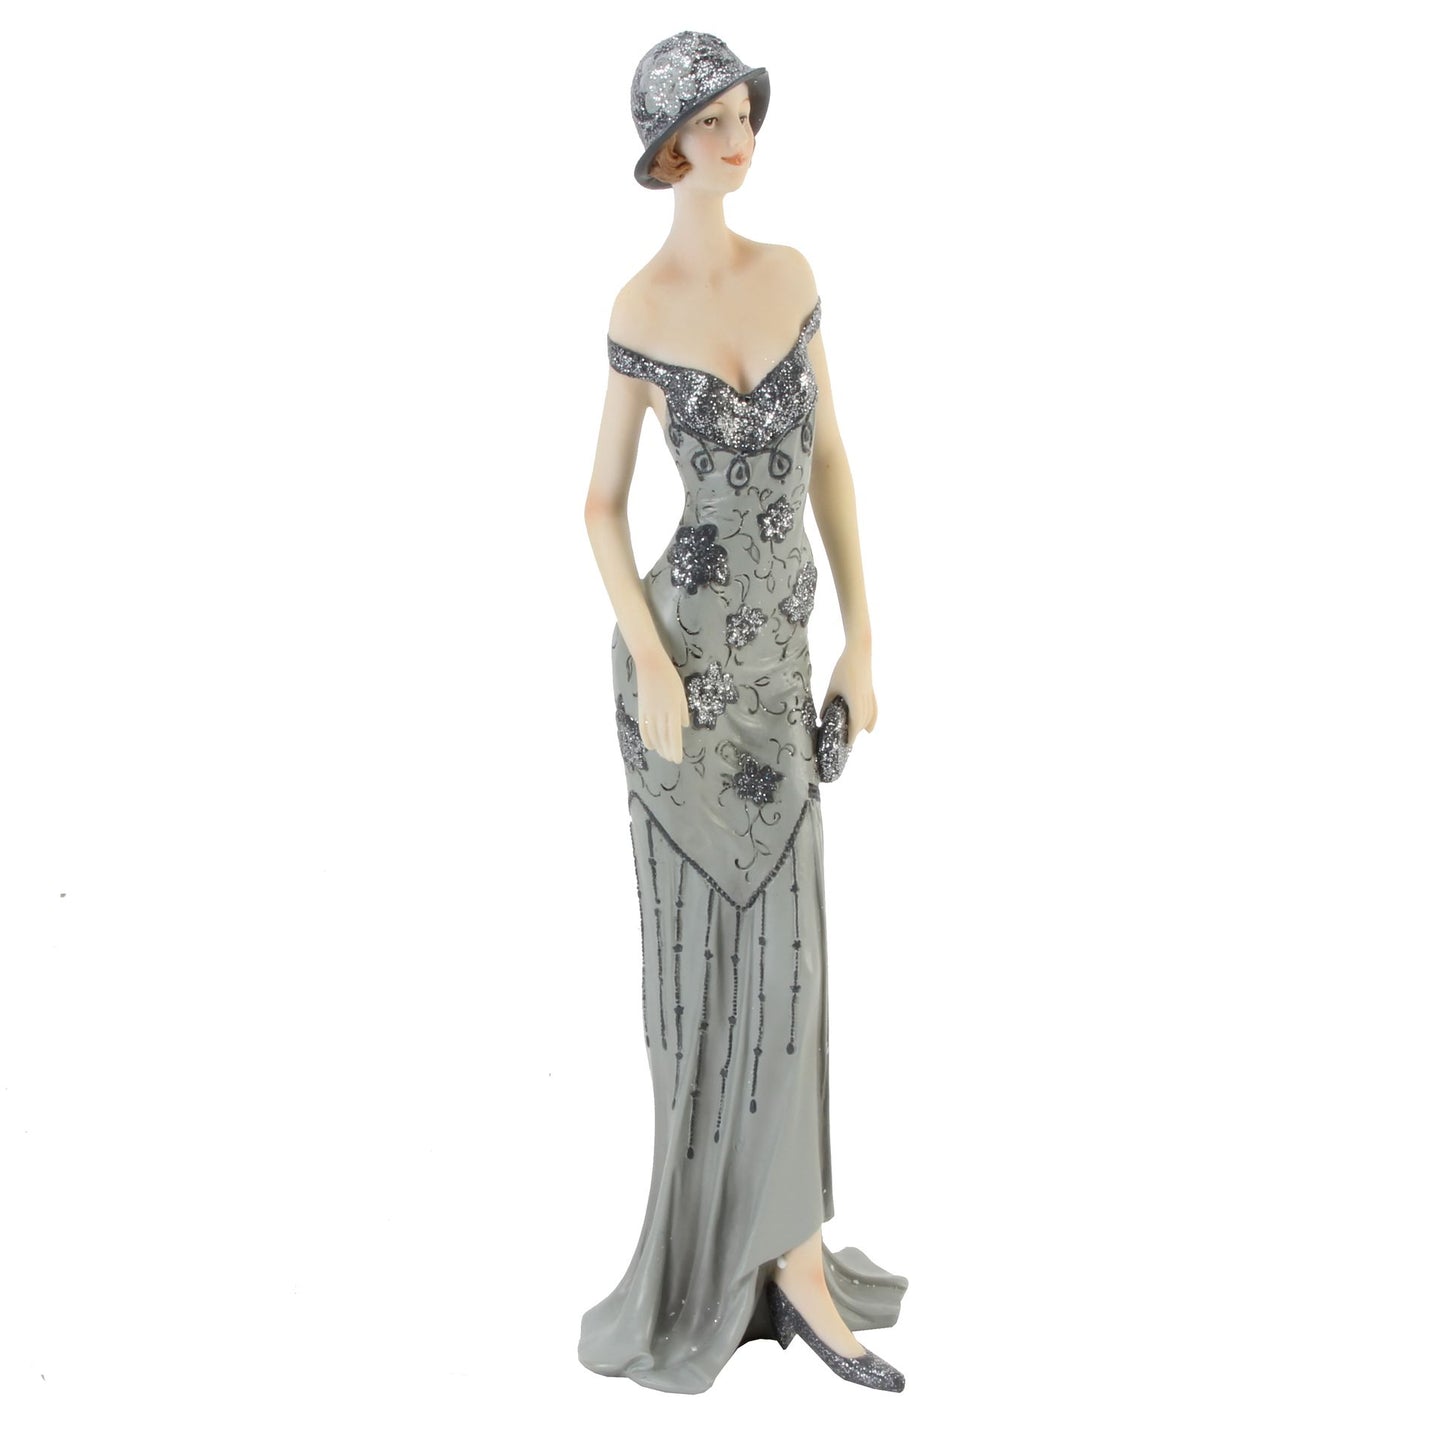 Broadway Belles "Peggy" Lady Figurine, Silver Glitter Dress